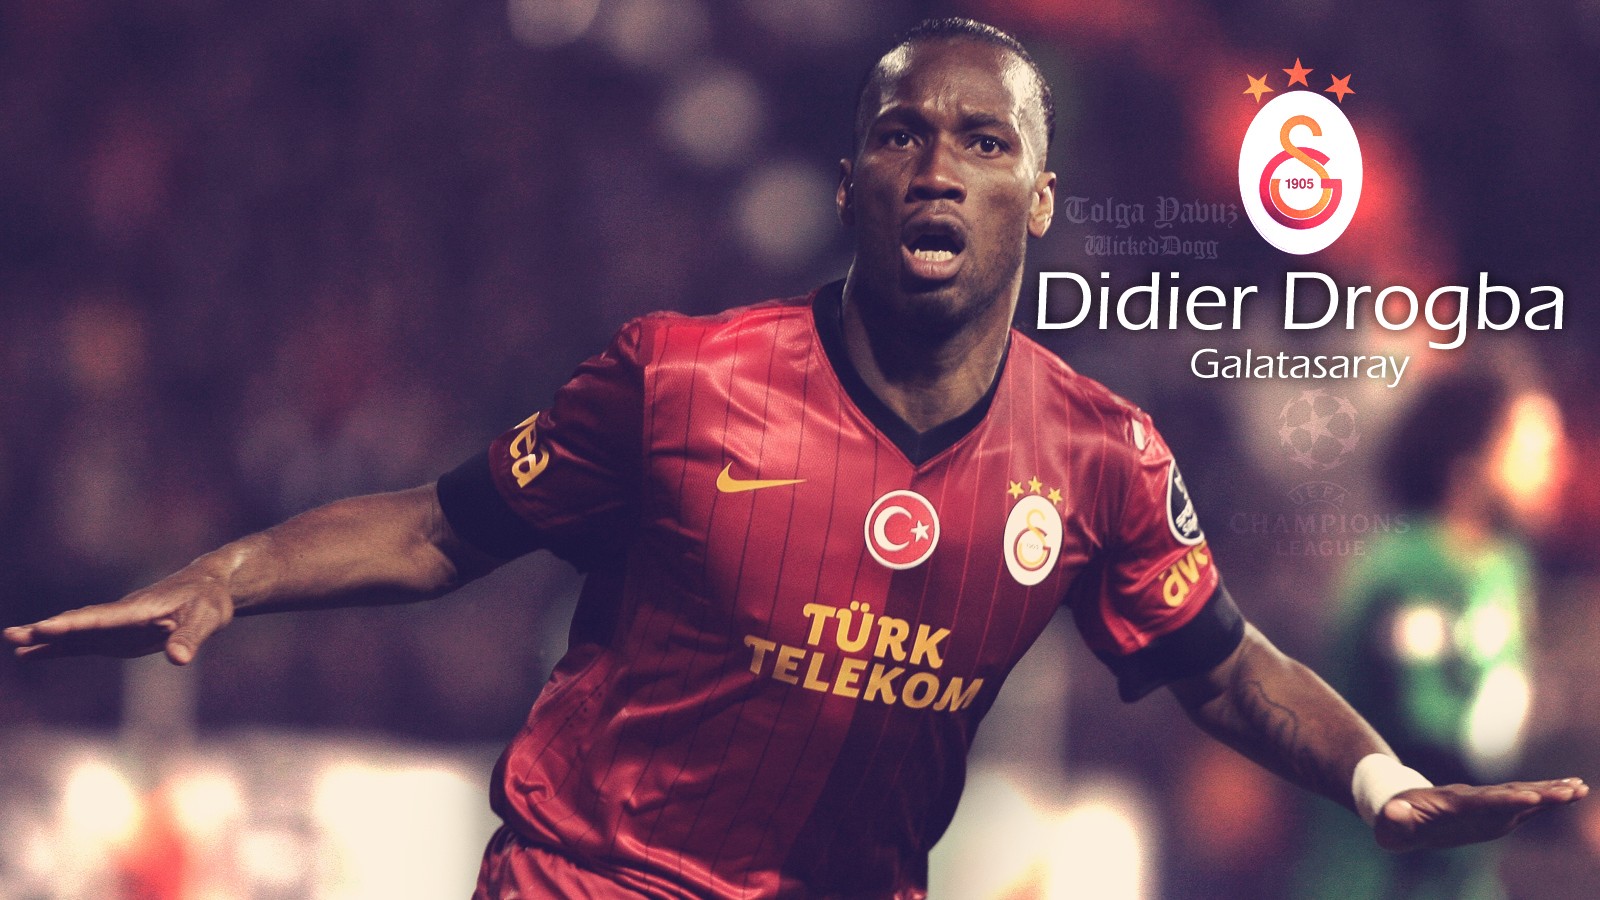 Didier Drogba - Didier Drogba Galatasaray Wallpaper Hd , HD Wallpaper & Backgrounds